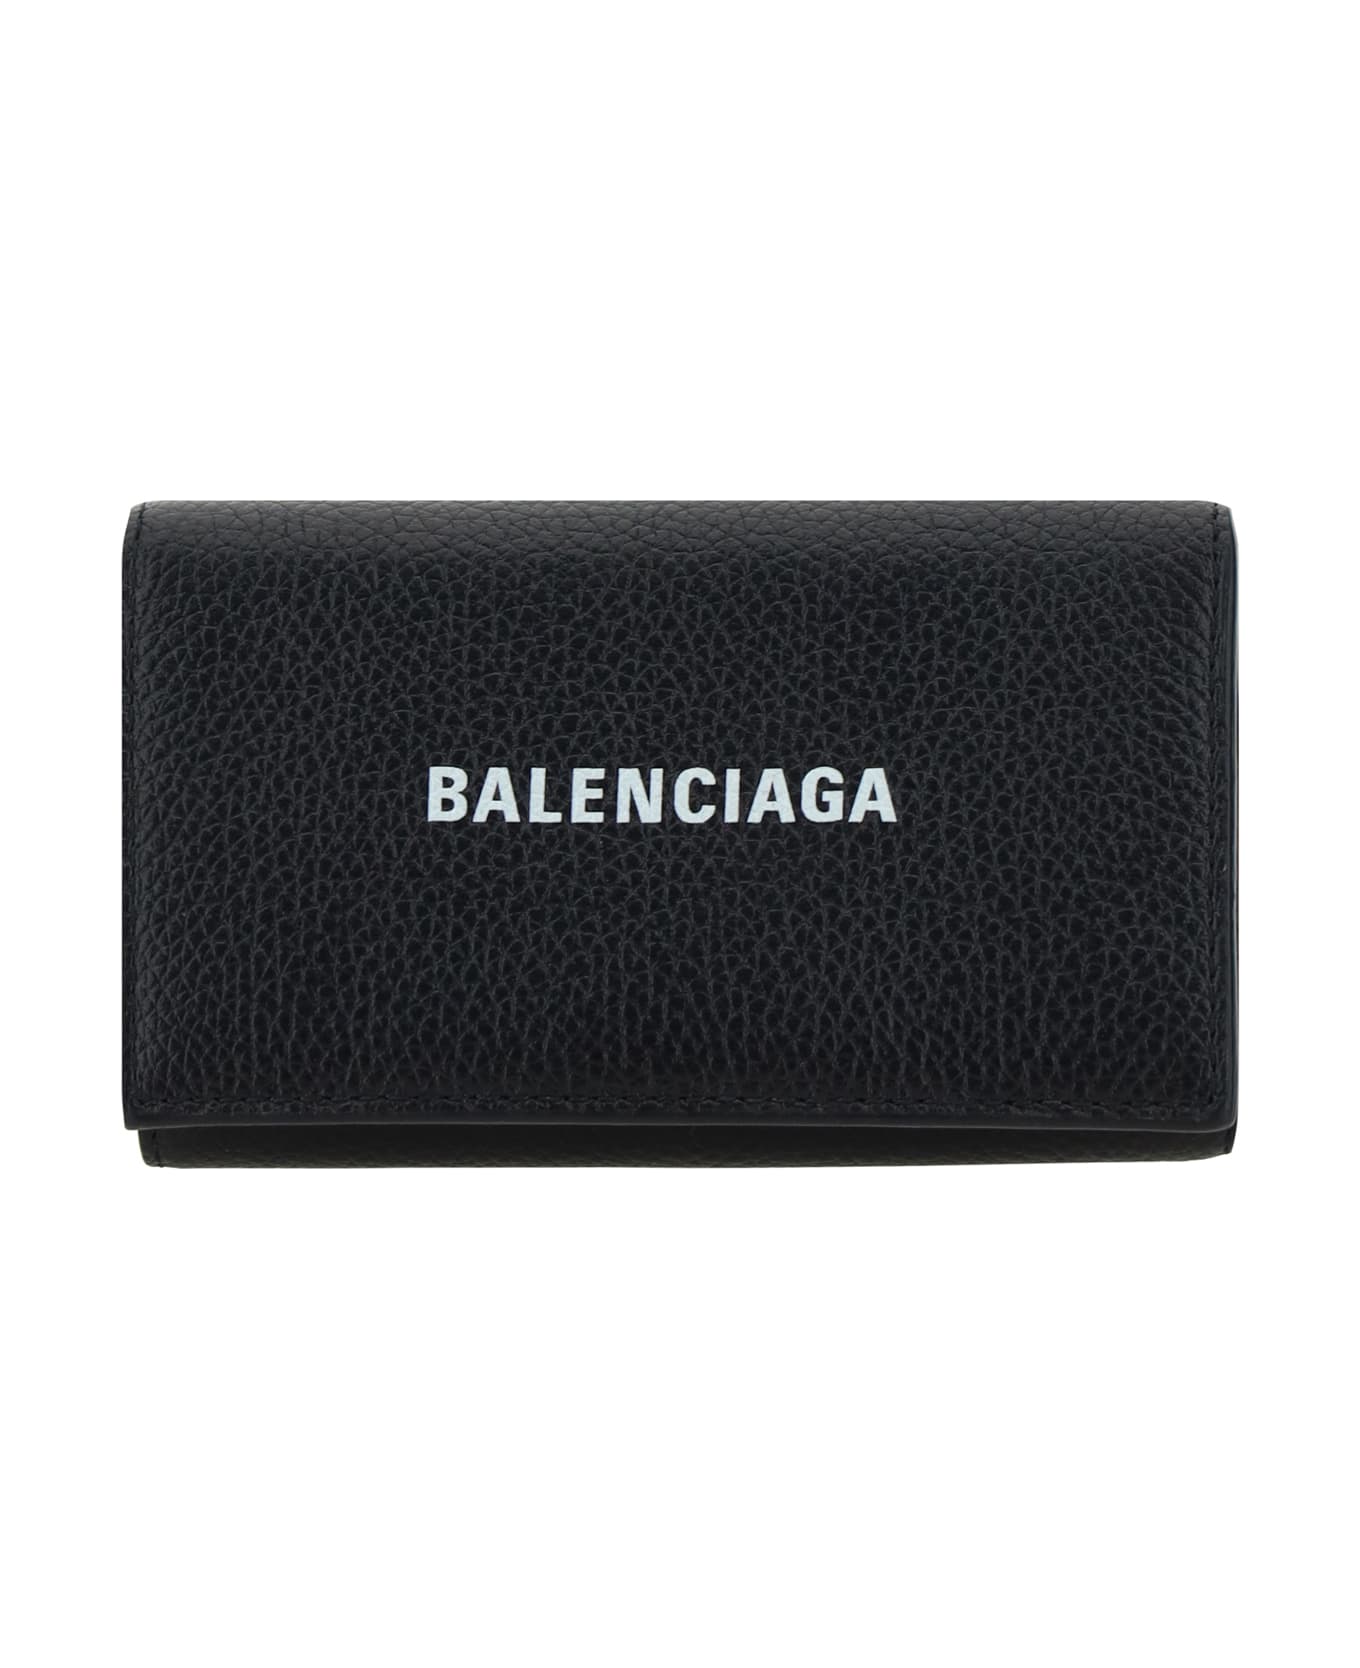 Balenciaga Key Ring - Black/white